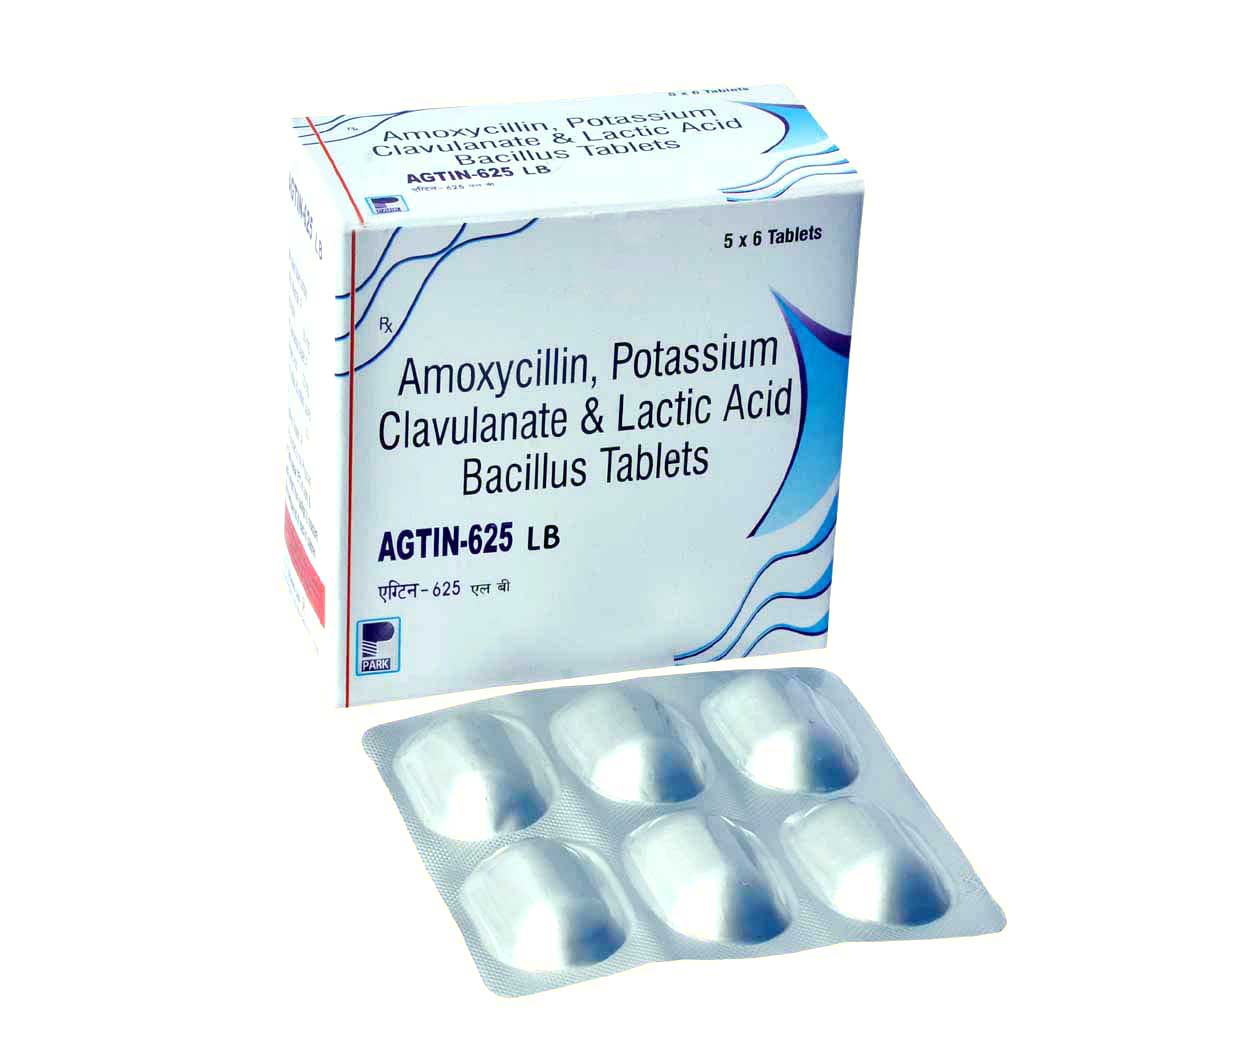 Product Name: AGTIN 625 LB, Compositions of AGTIN 625 LB are Amoxycillin, Potassium Clavulanate & Lactic Acid Bacillus Tablets - Park Pharmaceuticals